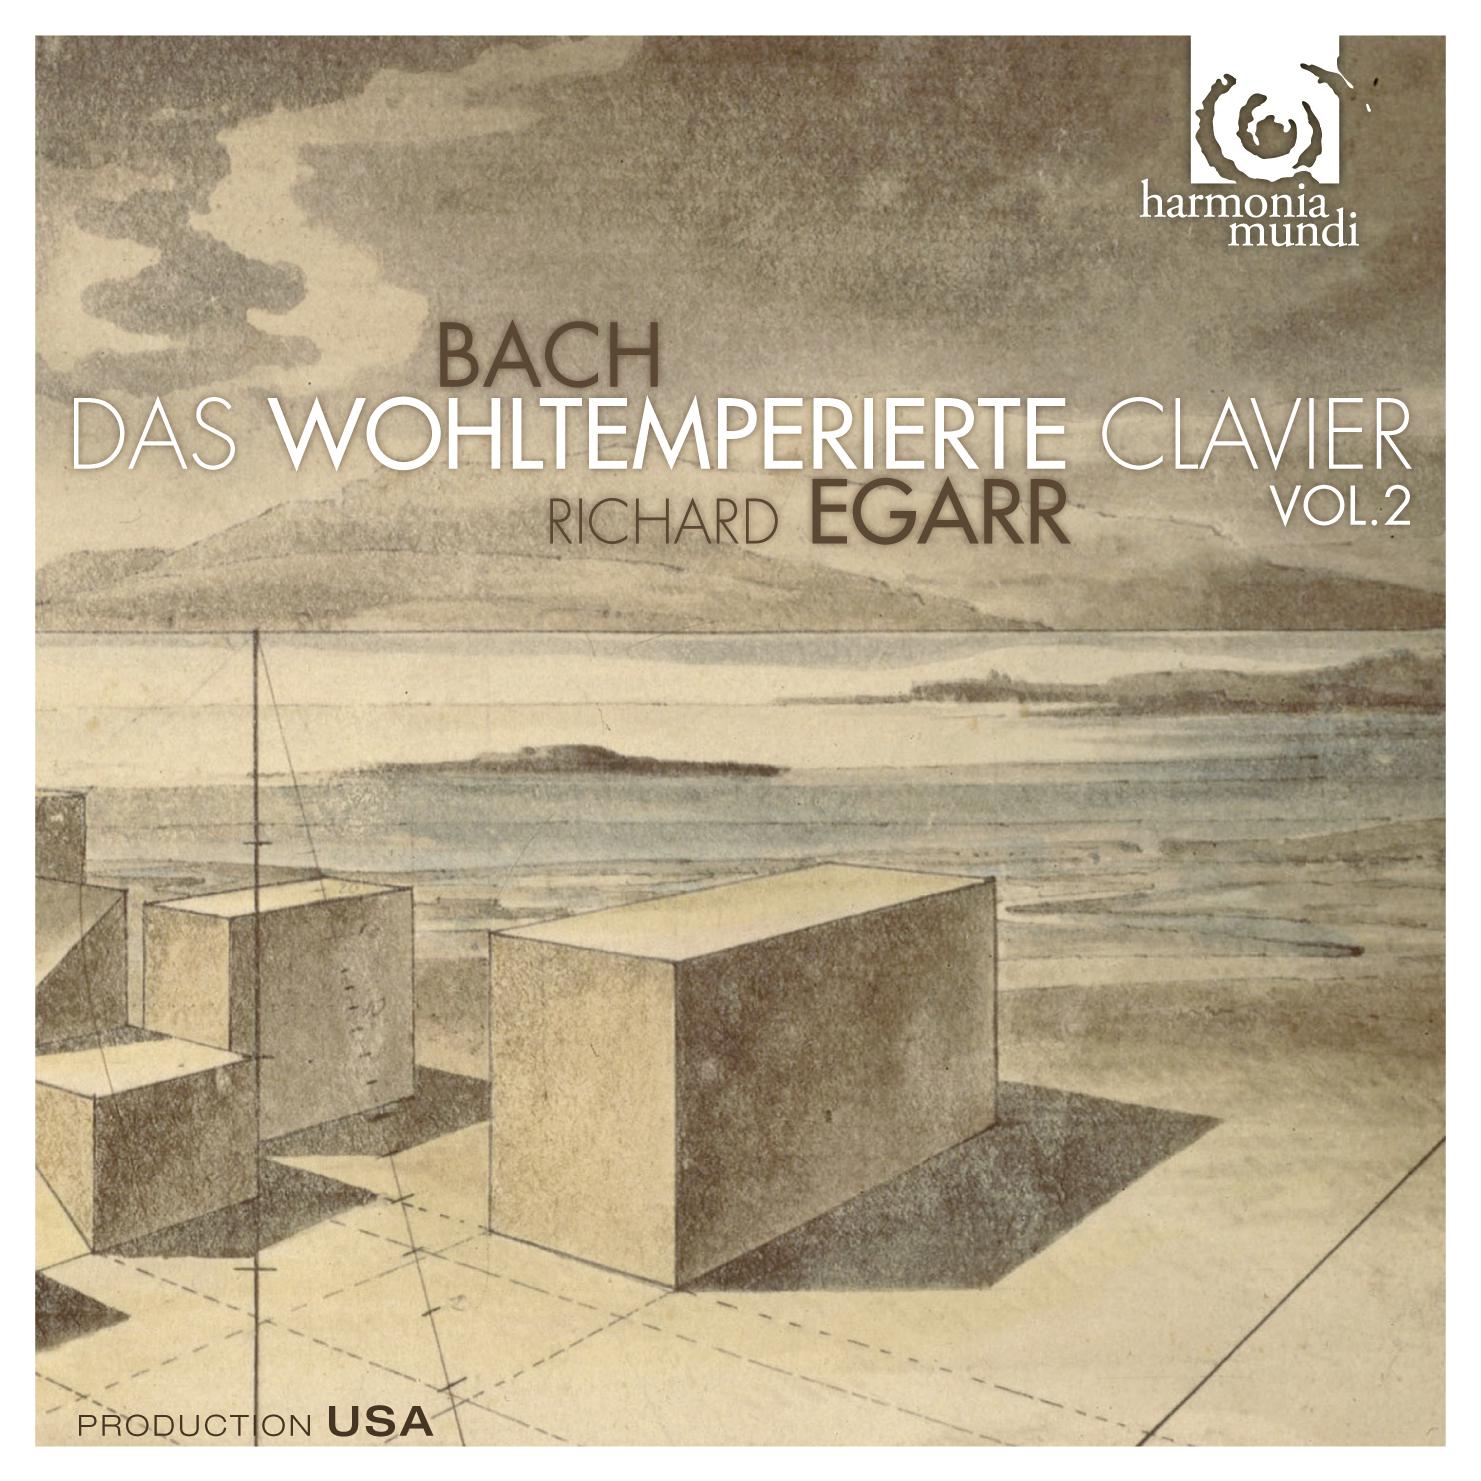 Well-Tempered Clavier, Book II, BWV 870-893: Prelude X in E Minor, BWV 879